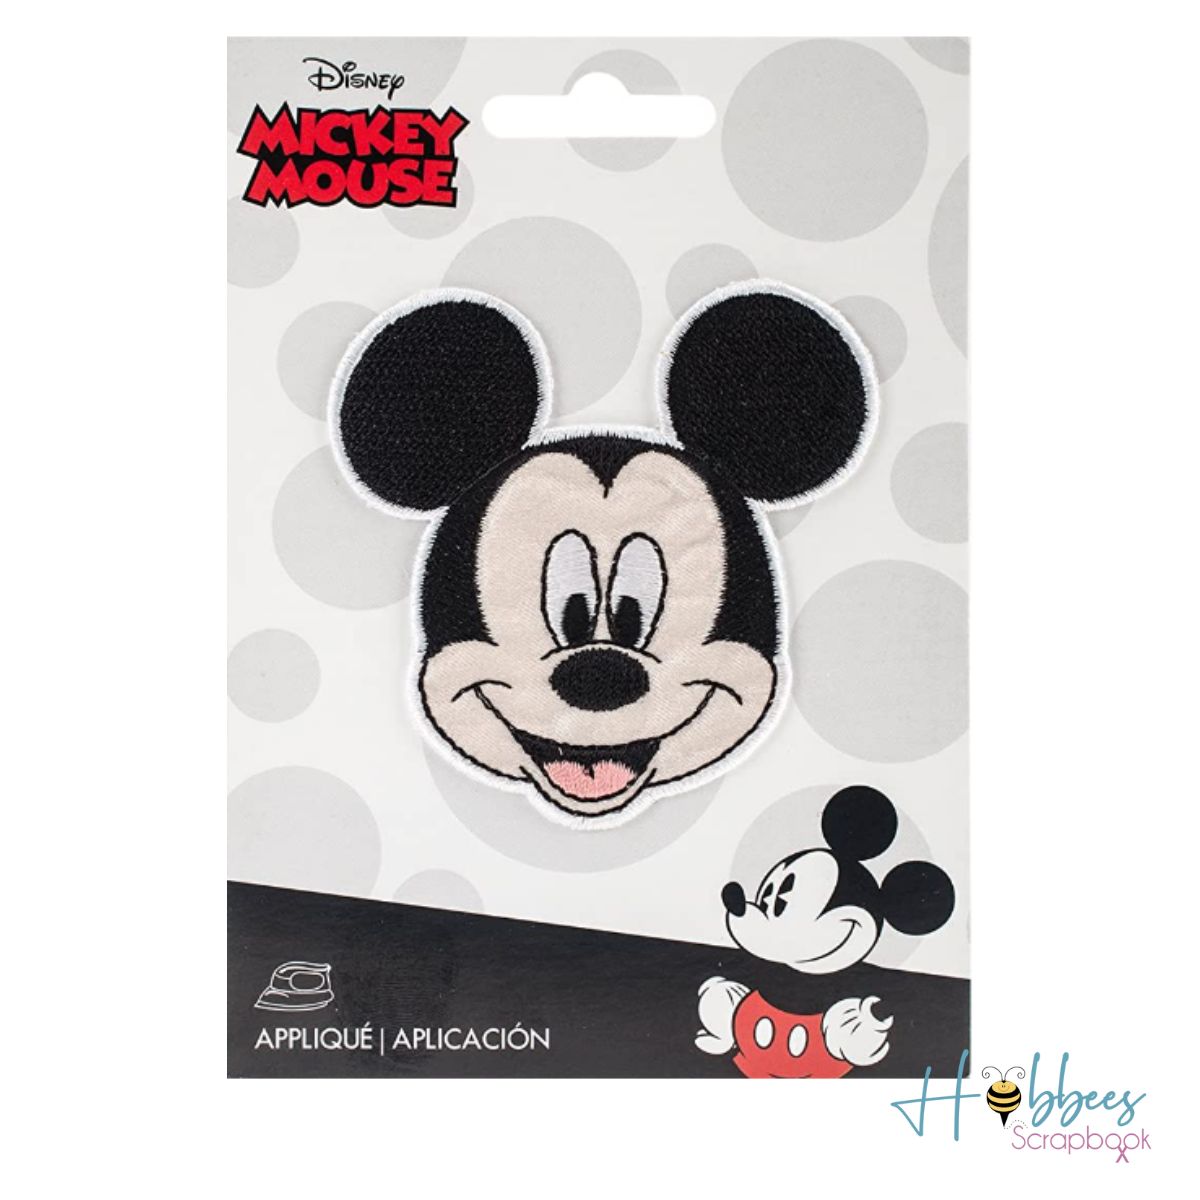 Disney © Mickey Mouse Goofy - Parches termoadhesivos, tamaño: 6,5 x 7,1 cm, Catch the Patch - tu tienda de parches y parches de hierro